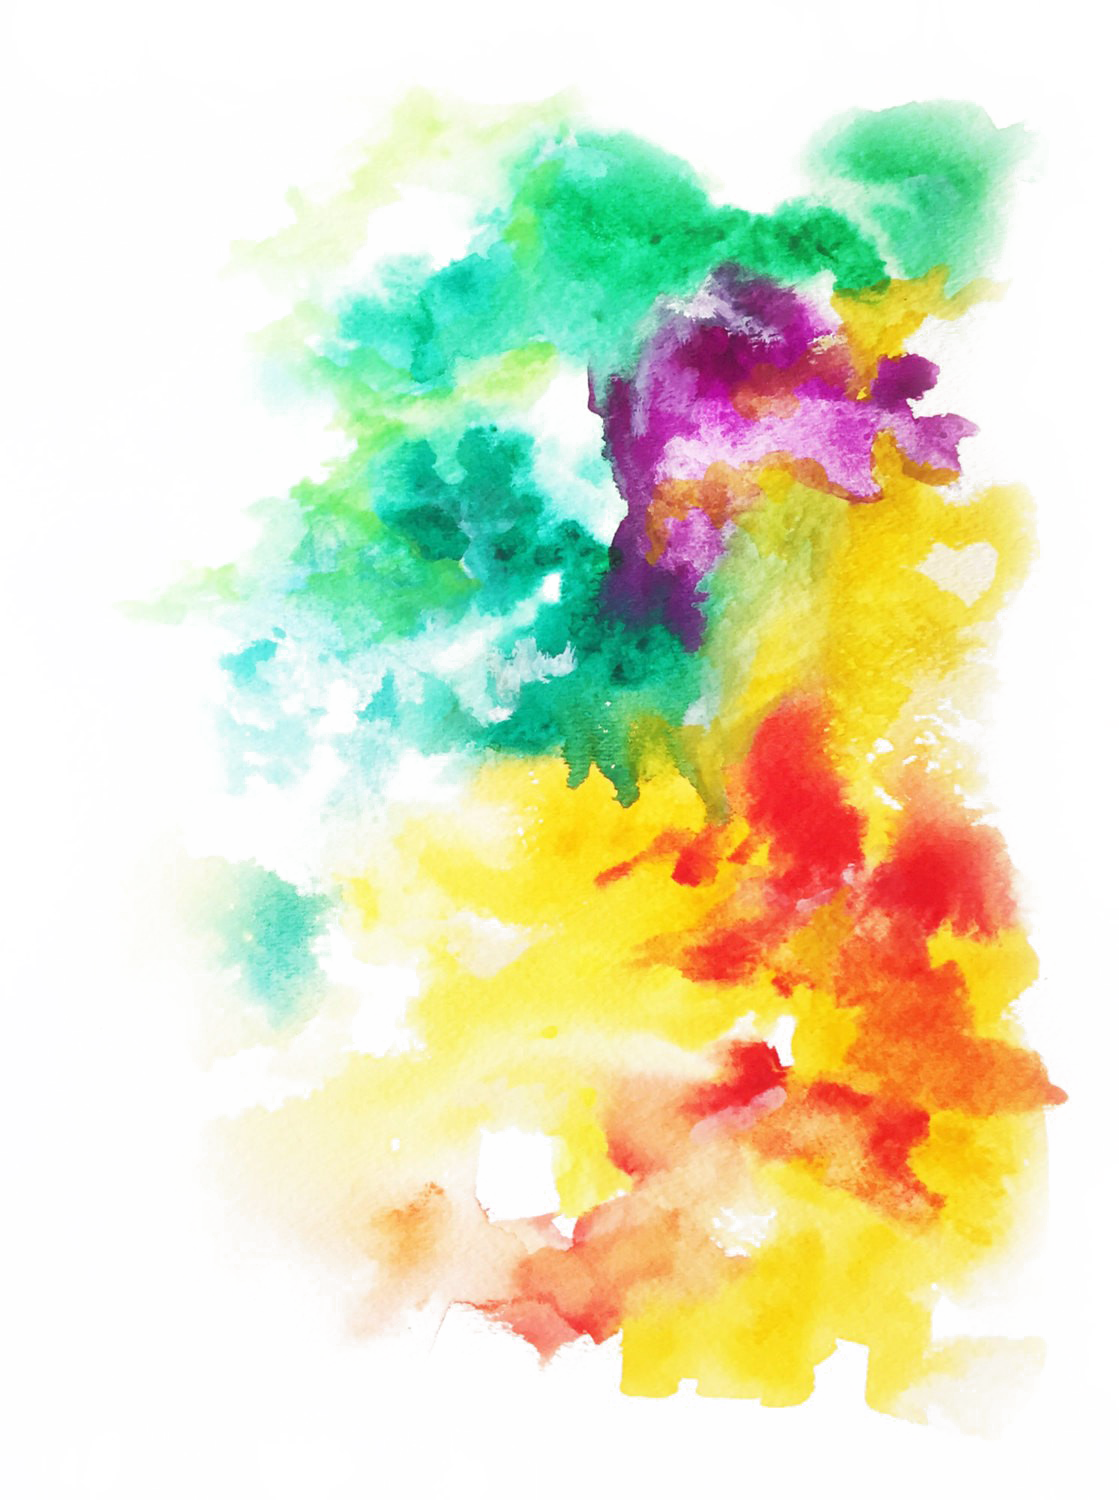 Watercolor texture PNG Transparent Image